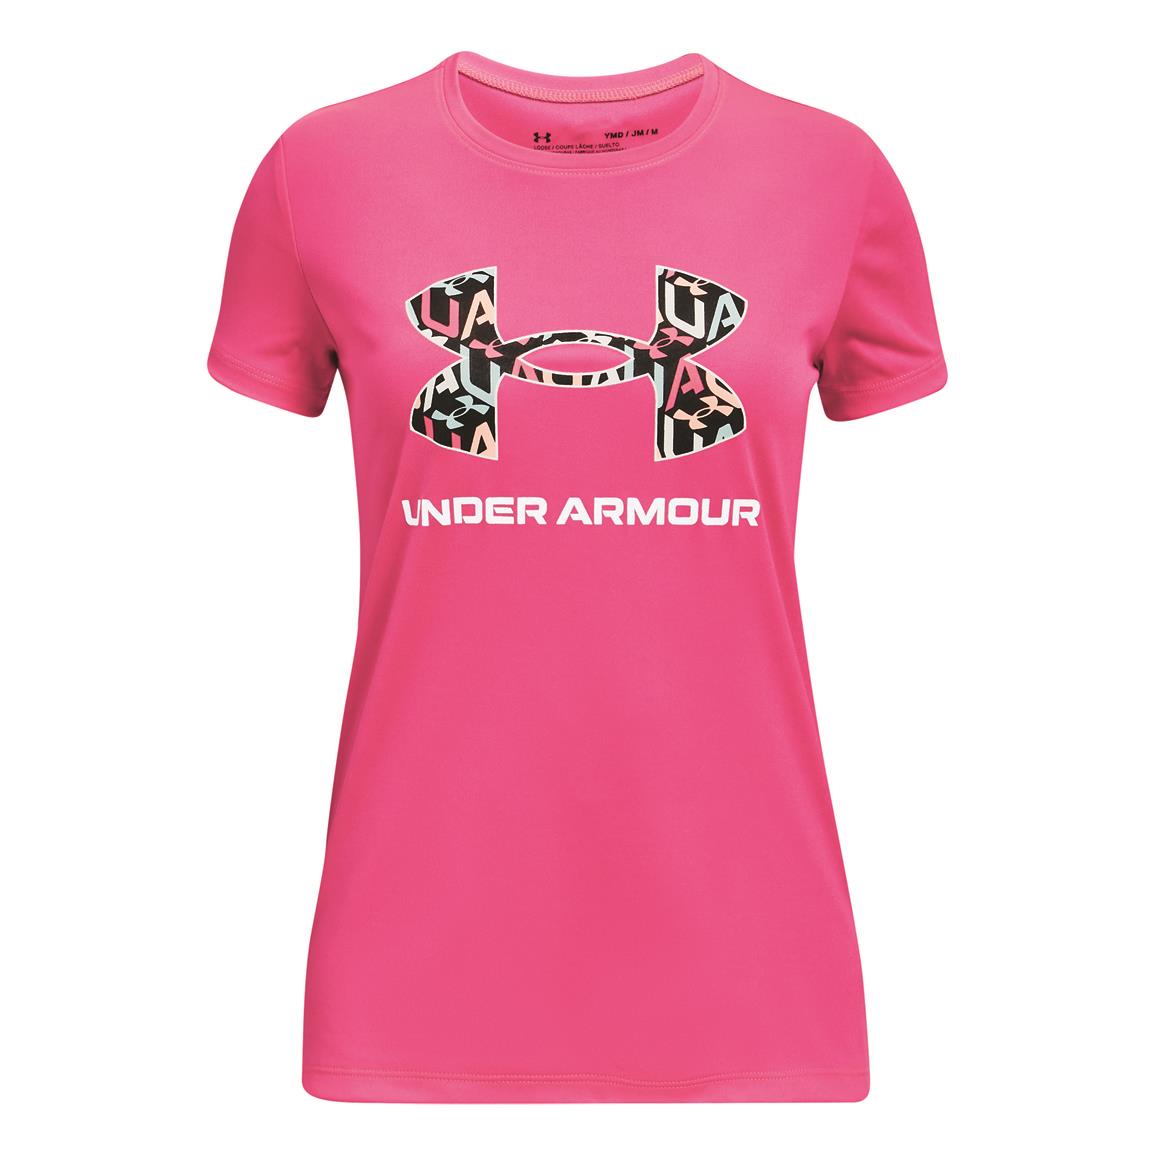 Under Armour Girls' Tech Solid Big Print Logo Shirt, Electro Pink/white